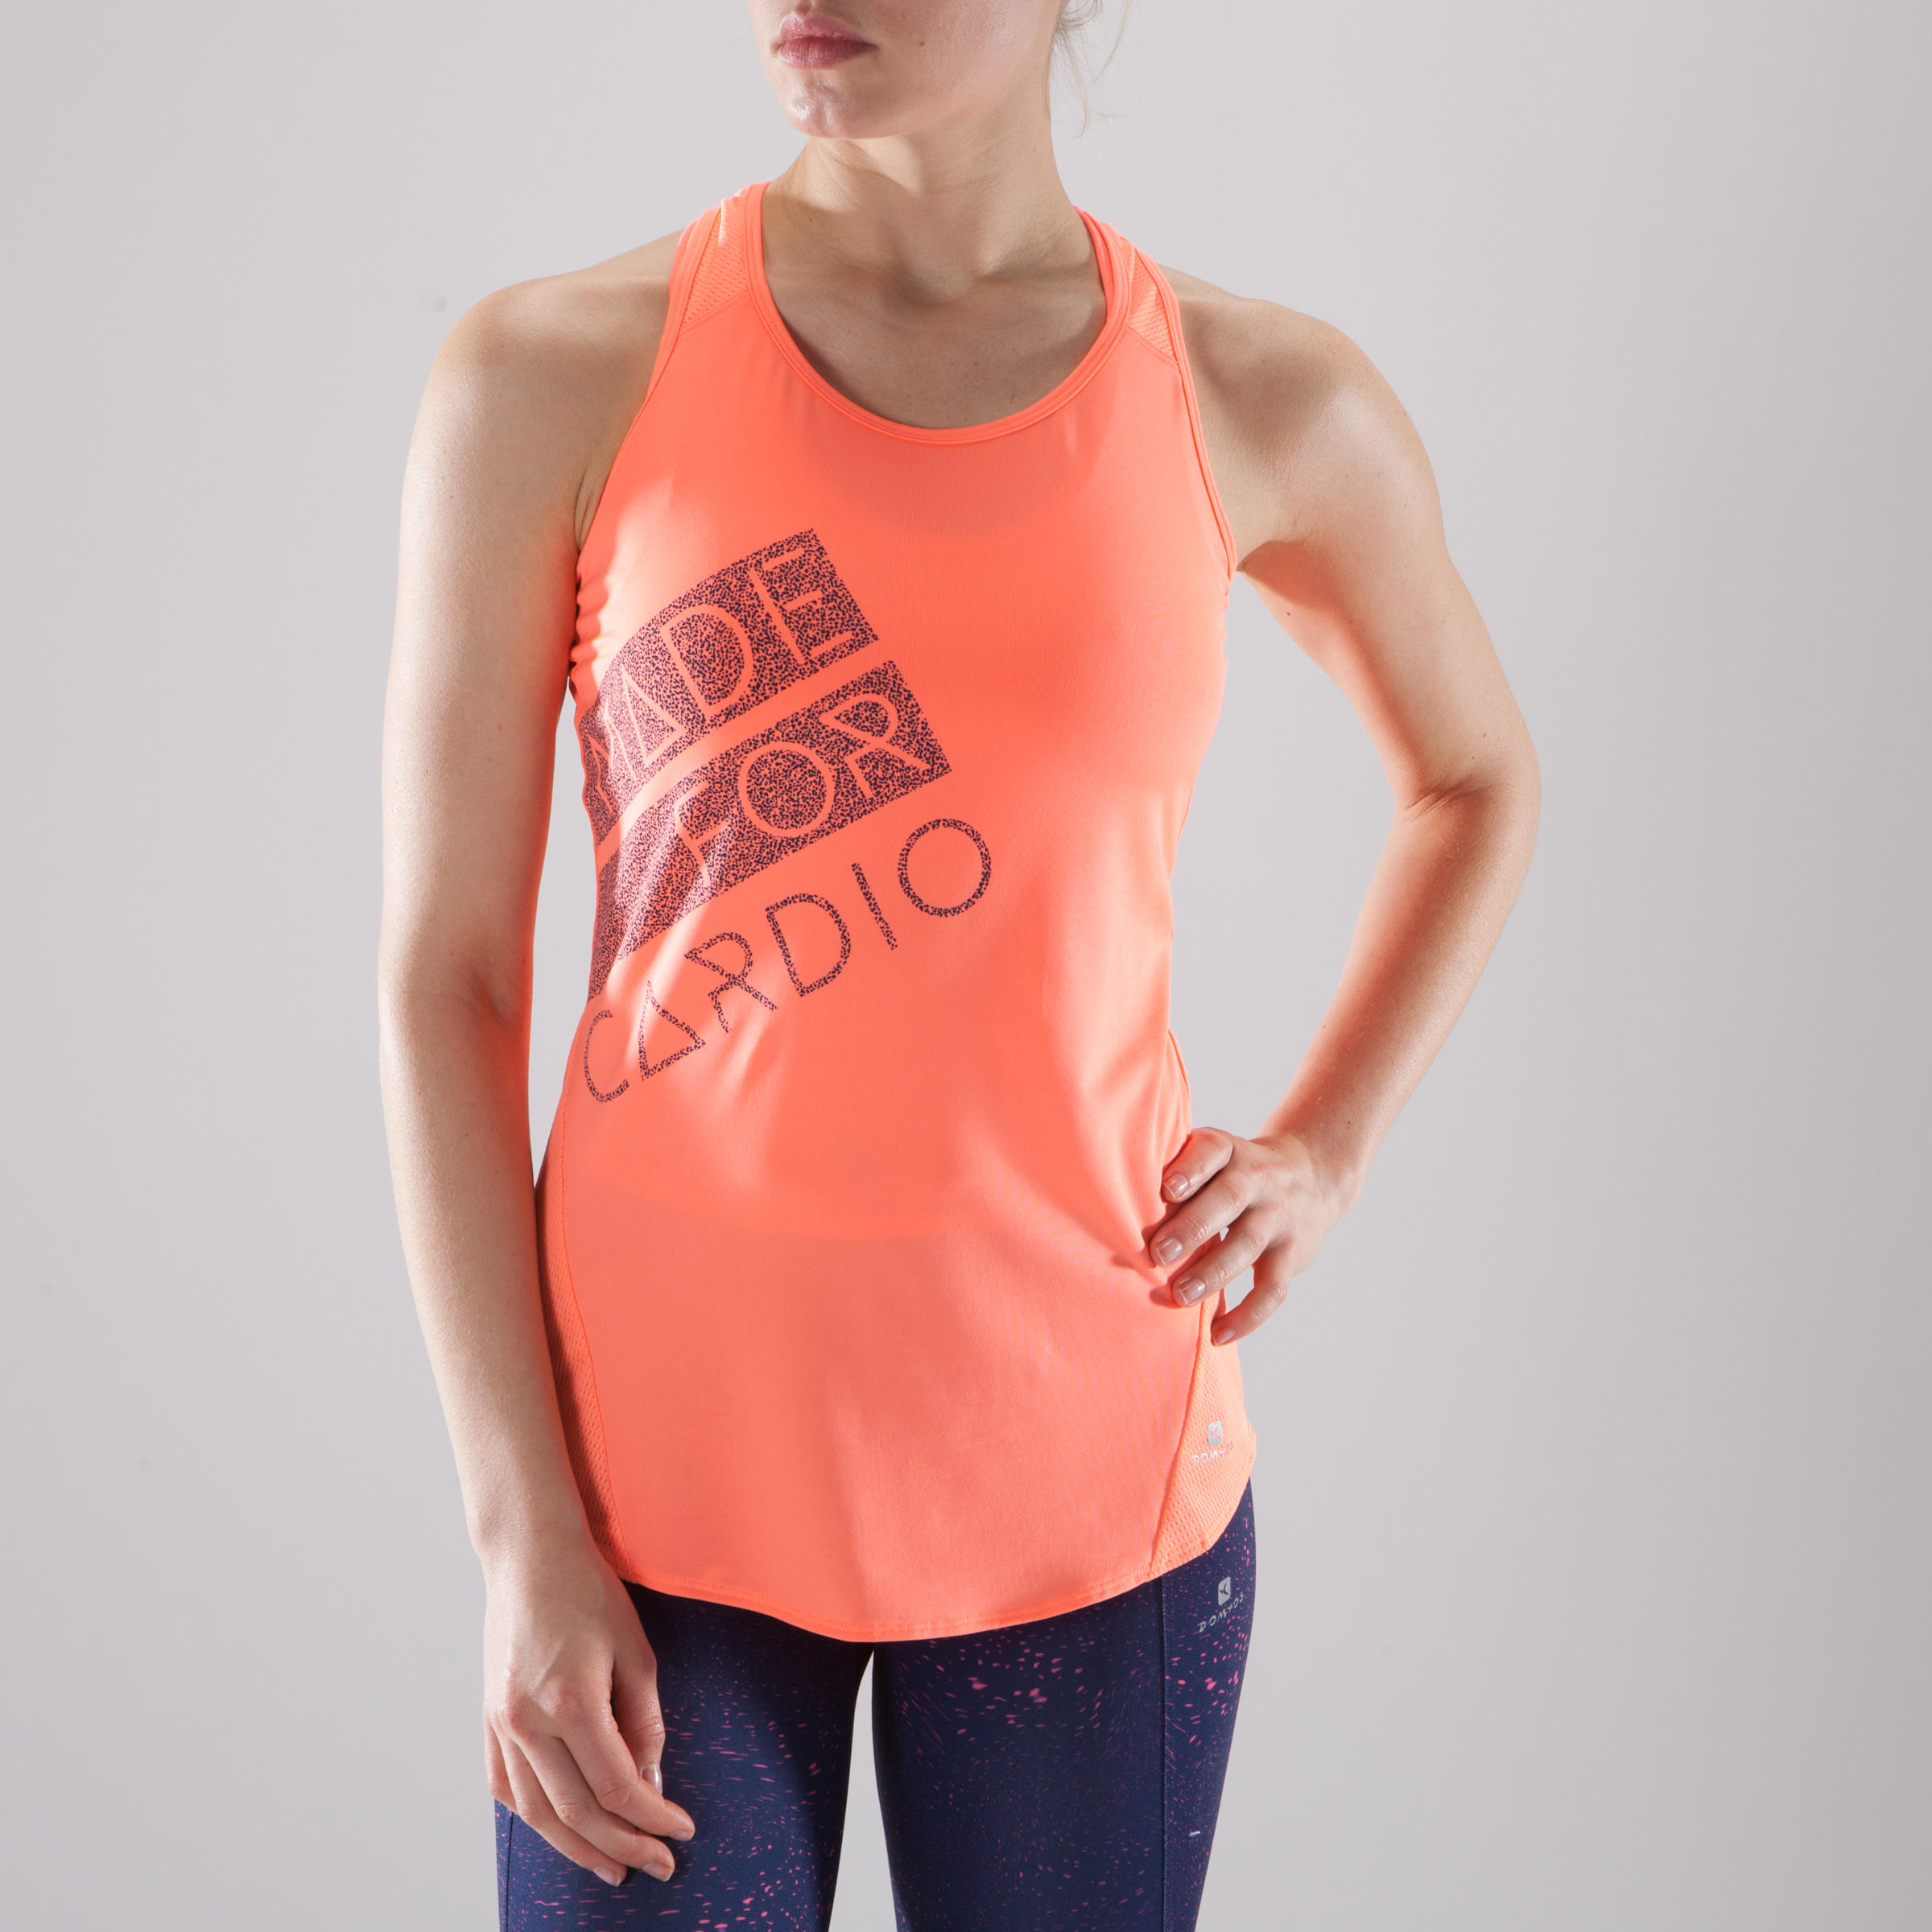 DOMYOS 120 Women's Cardio Fitness Tank Top - Coral/Print